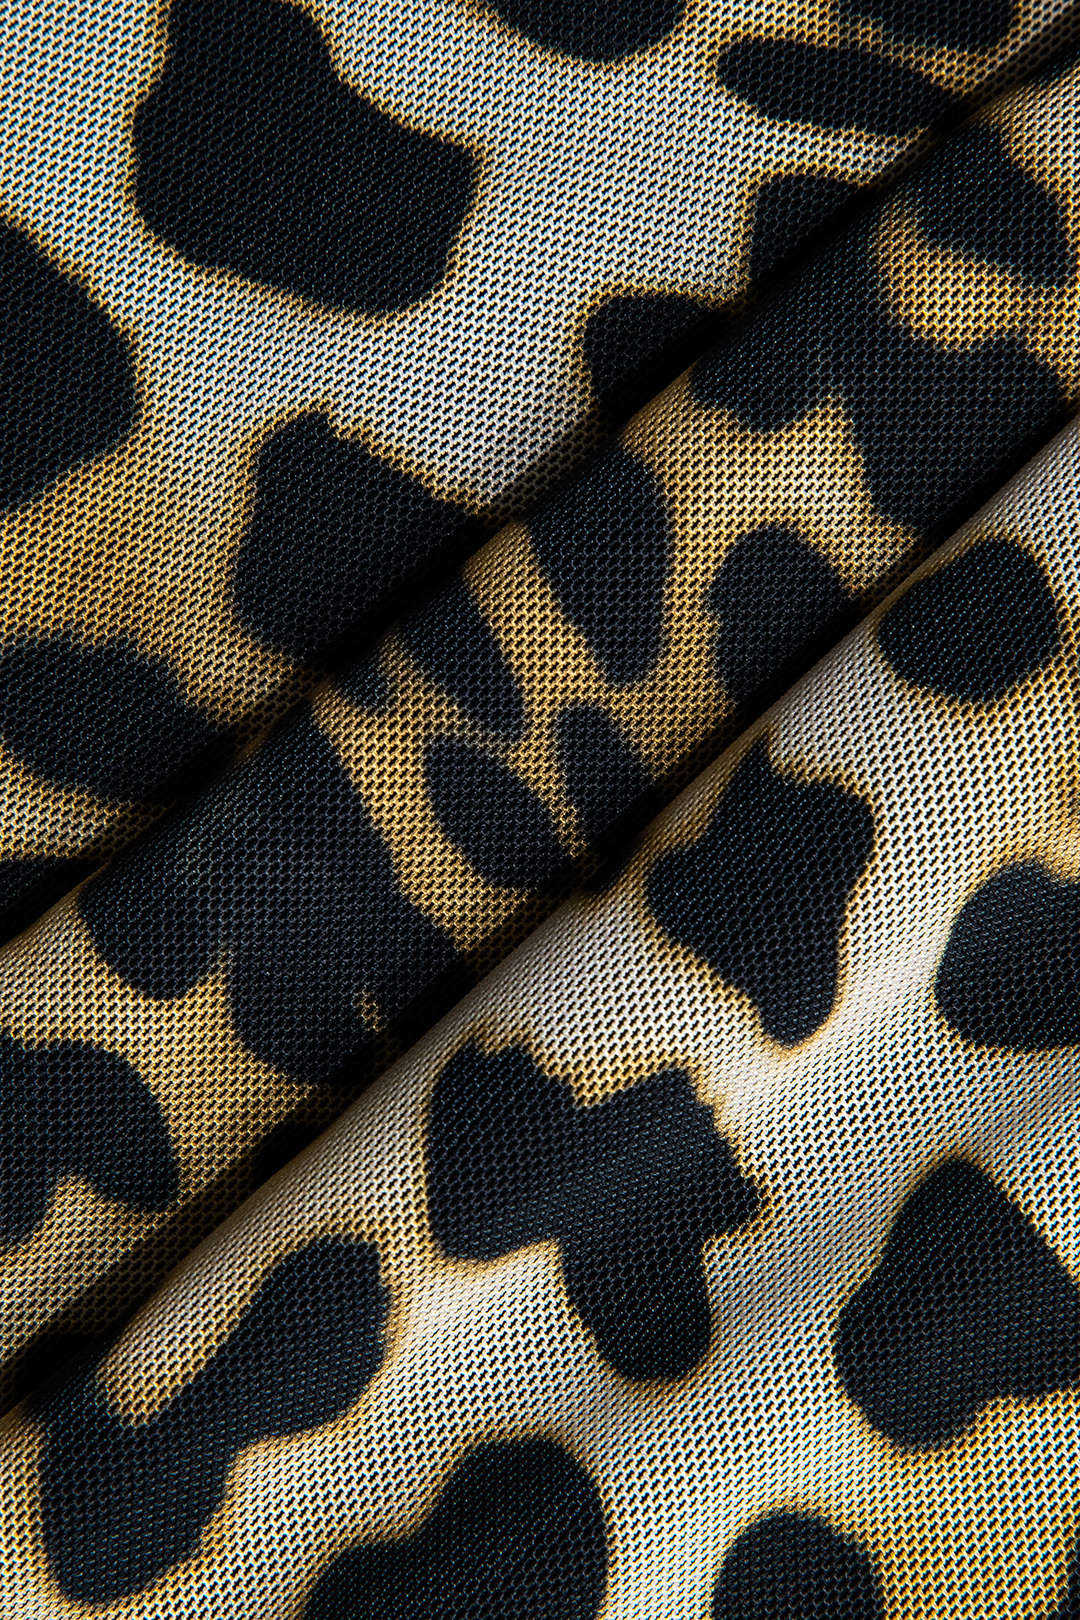 Leopard Print Reversible Split Maxi Skirt